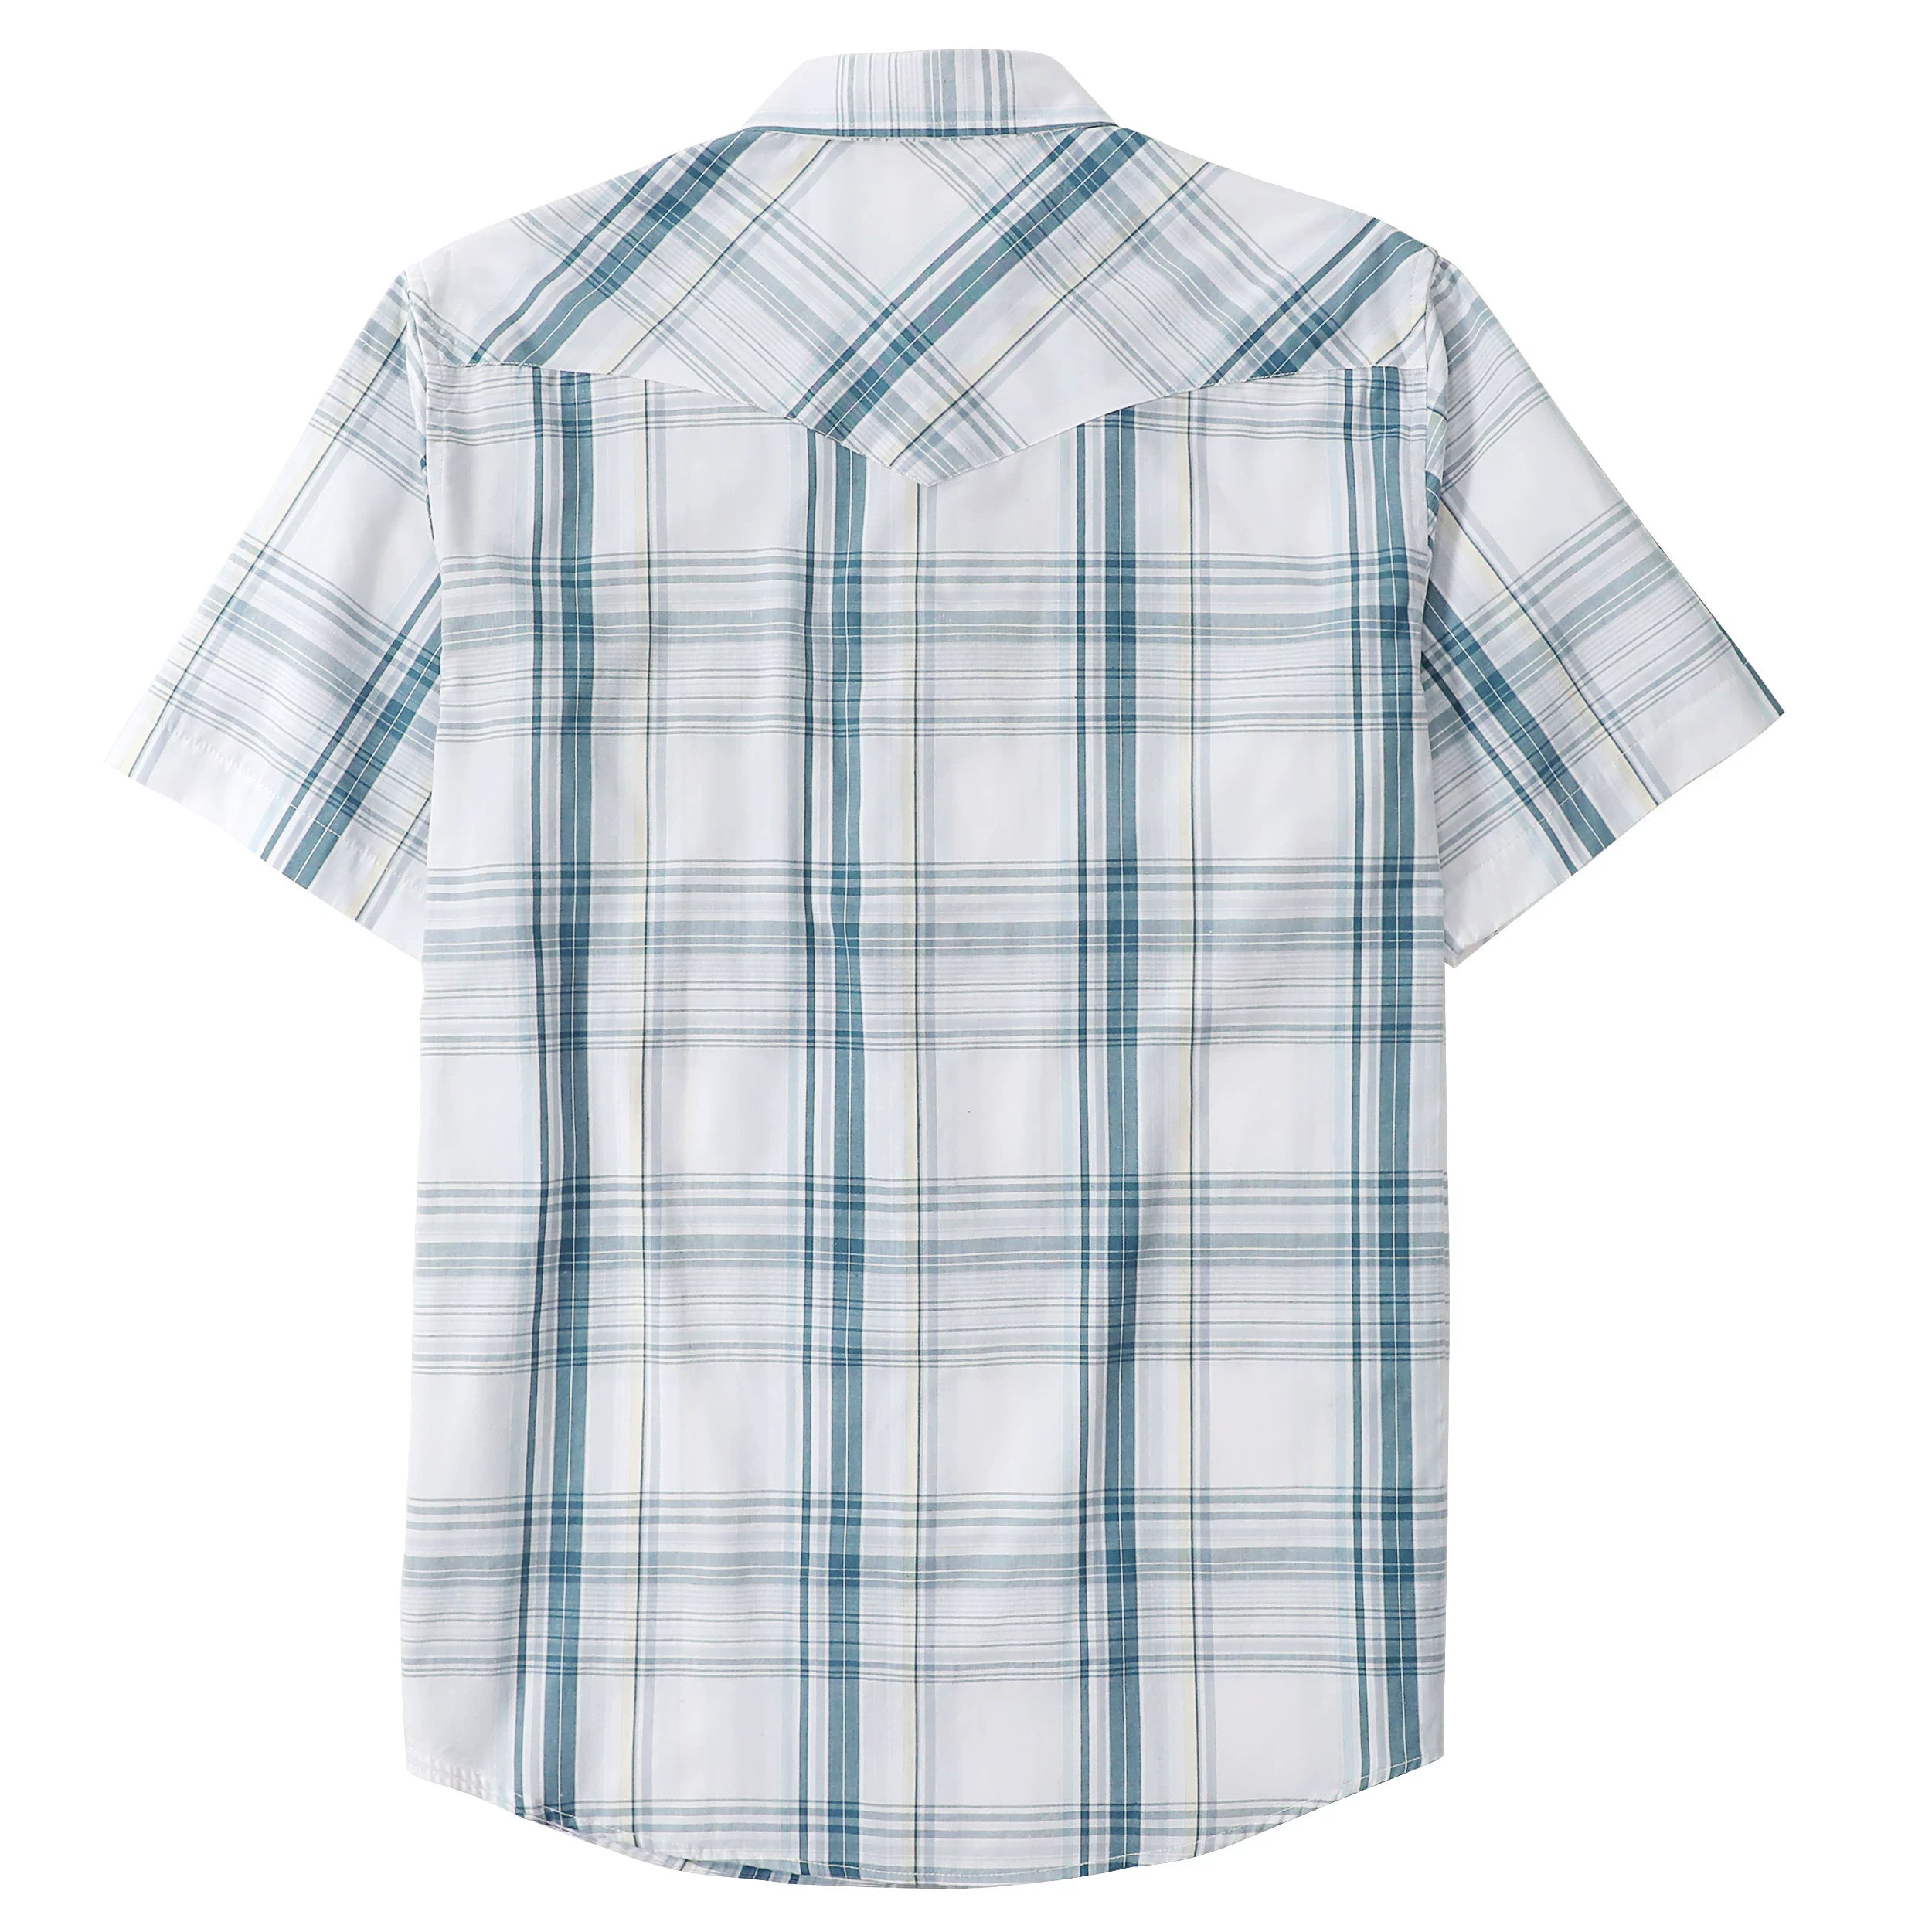 Dubinik® Western Shirts for Men Short Sleeve Plaid Pearl Snap Shirt Cowboy Casual Work Shirt#41016